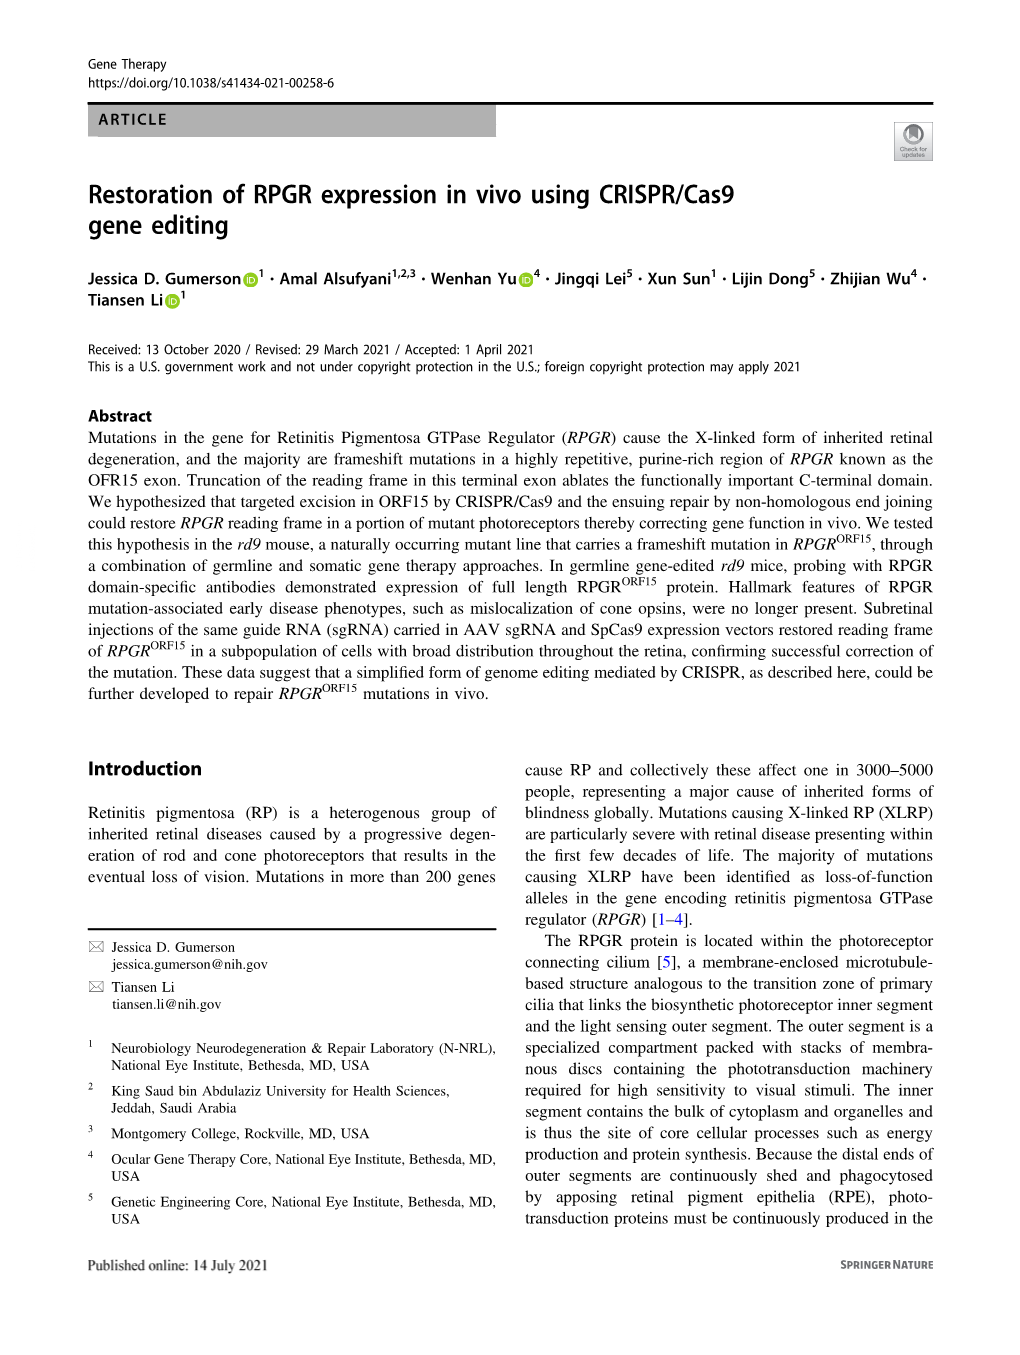 Restoration of RPGR Expression in Vivo Using CRISPR/Cas9 Gene Editing